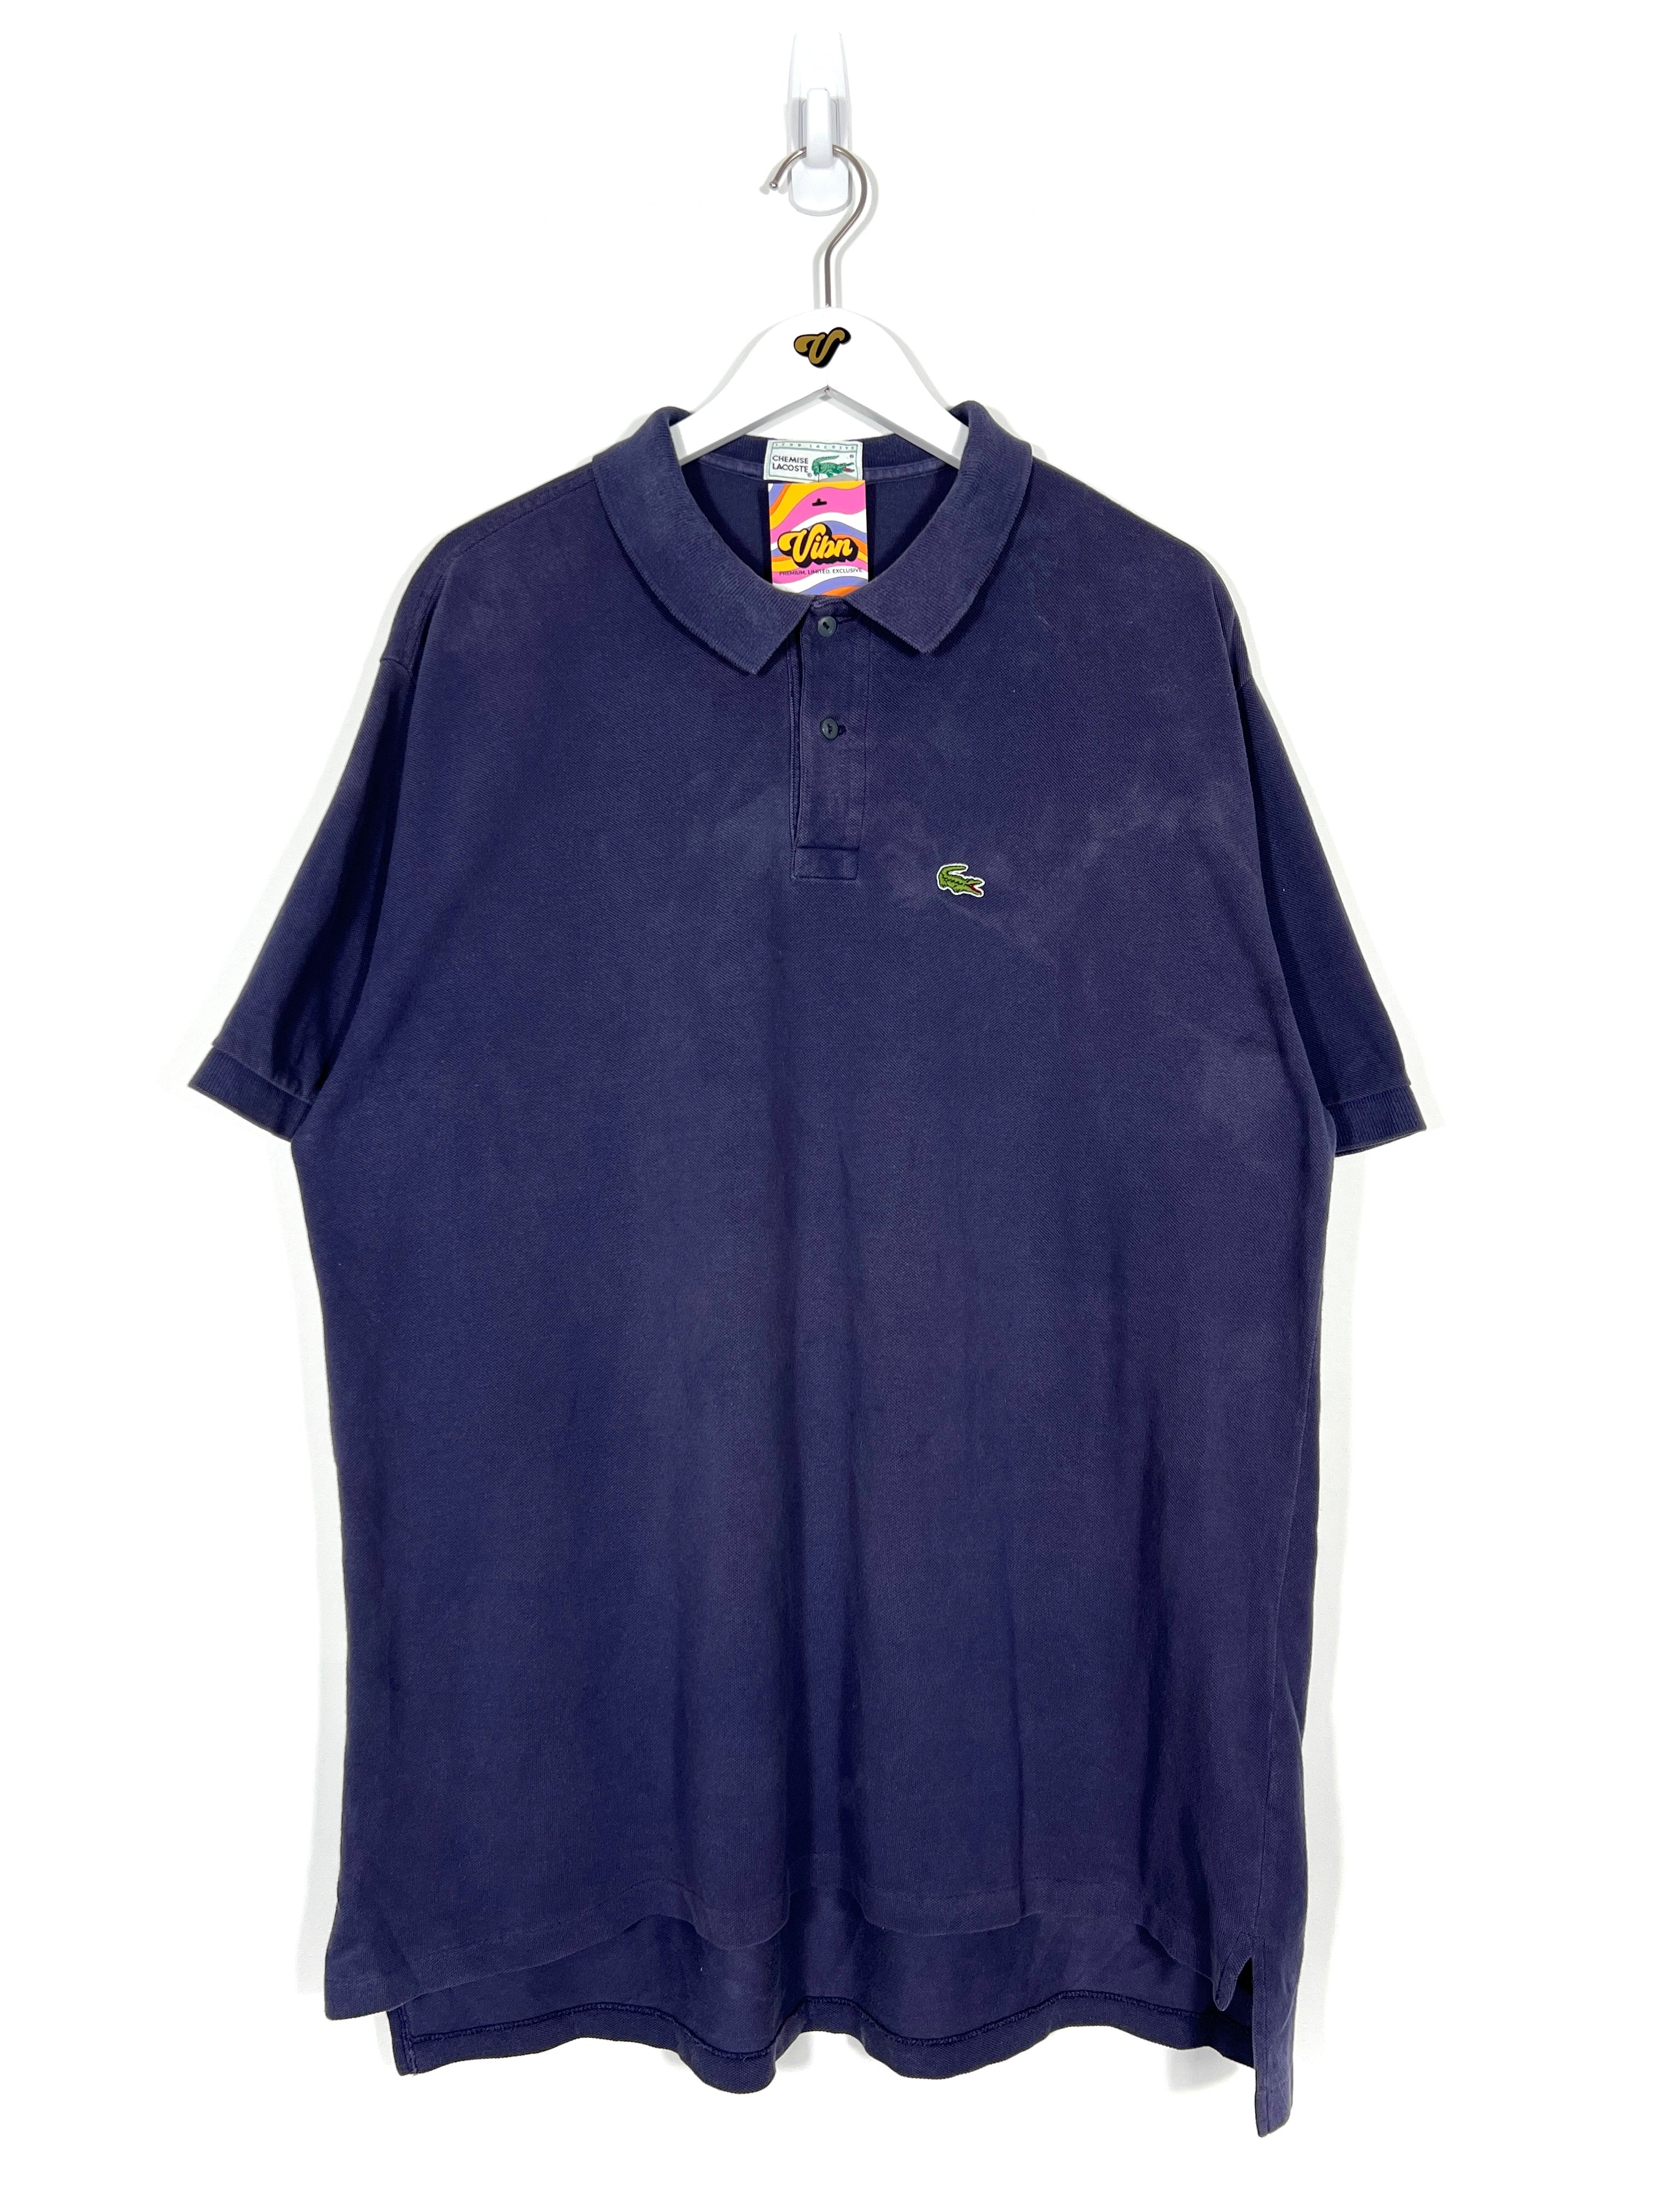 Vintage Lacoste Polo Shirt - Men's XL